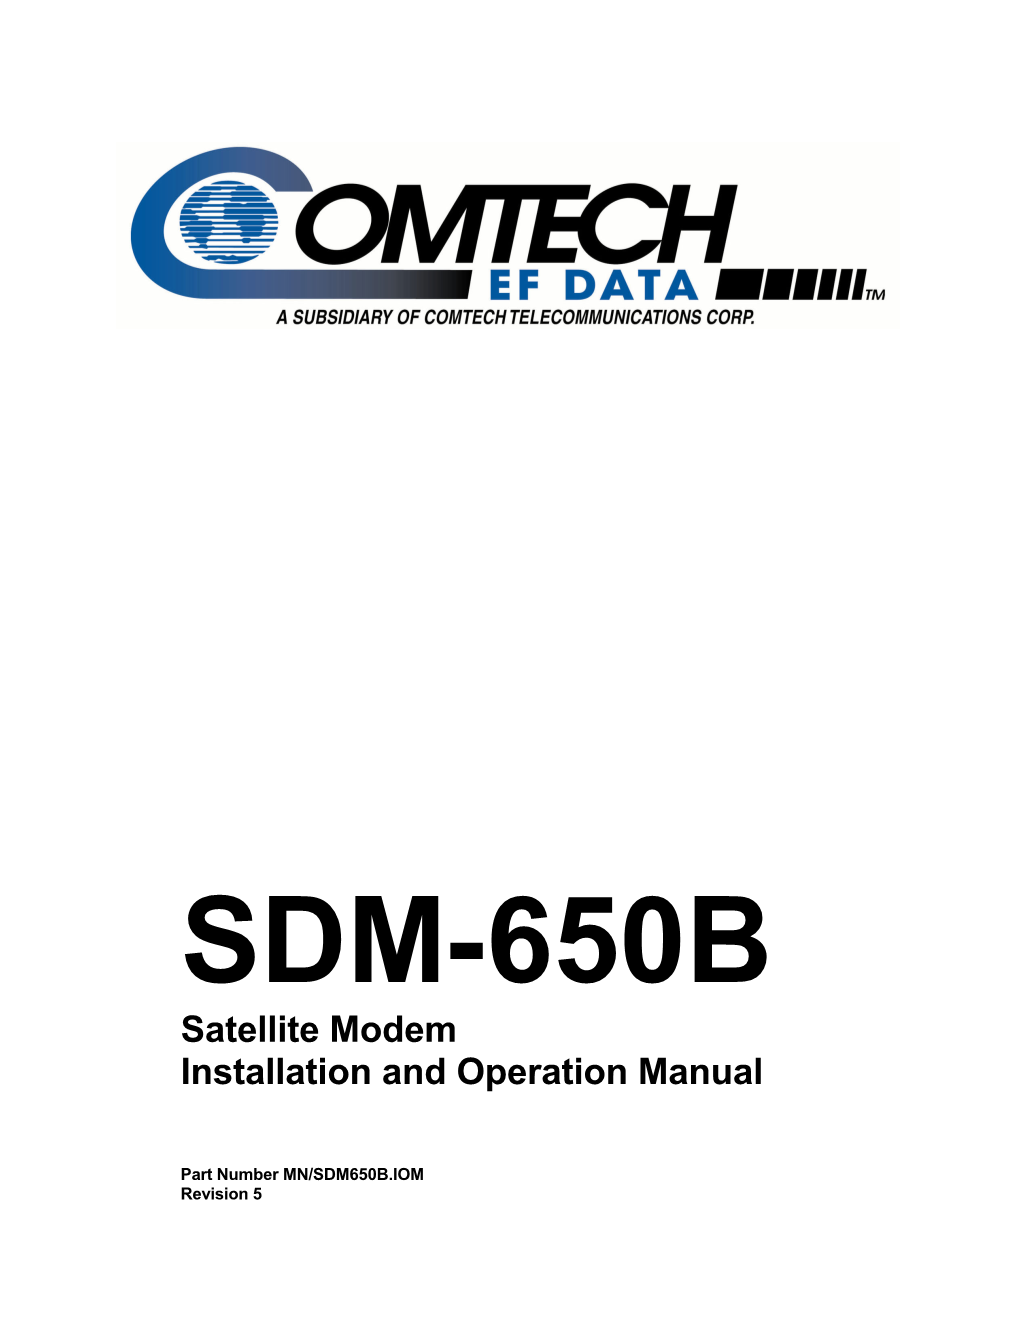 Satellite Modem Installation and Operation Manual